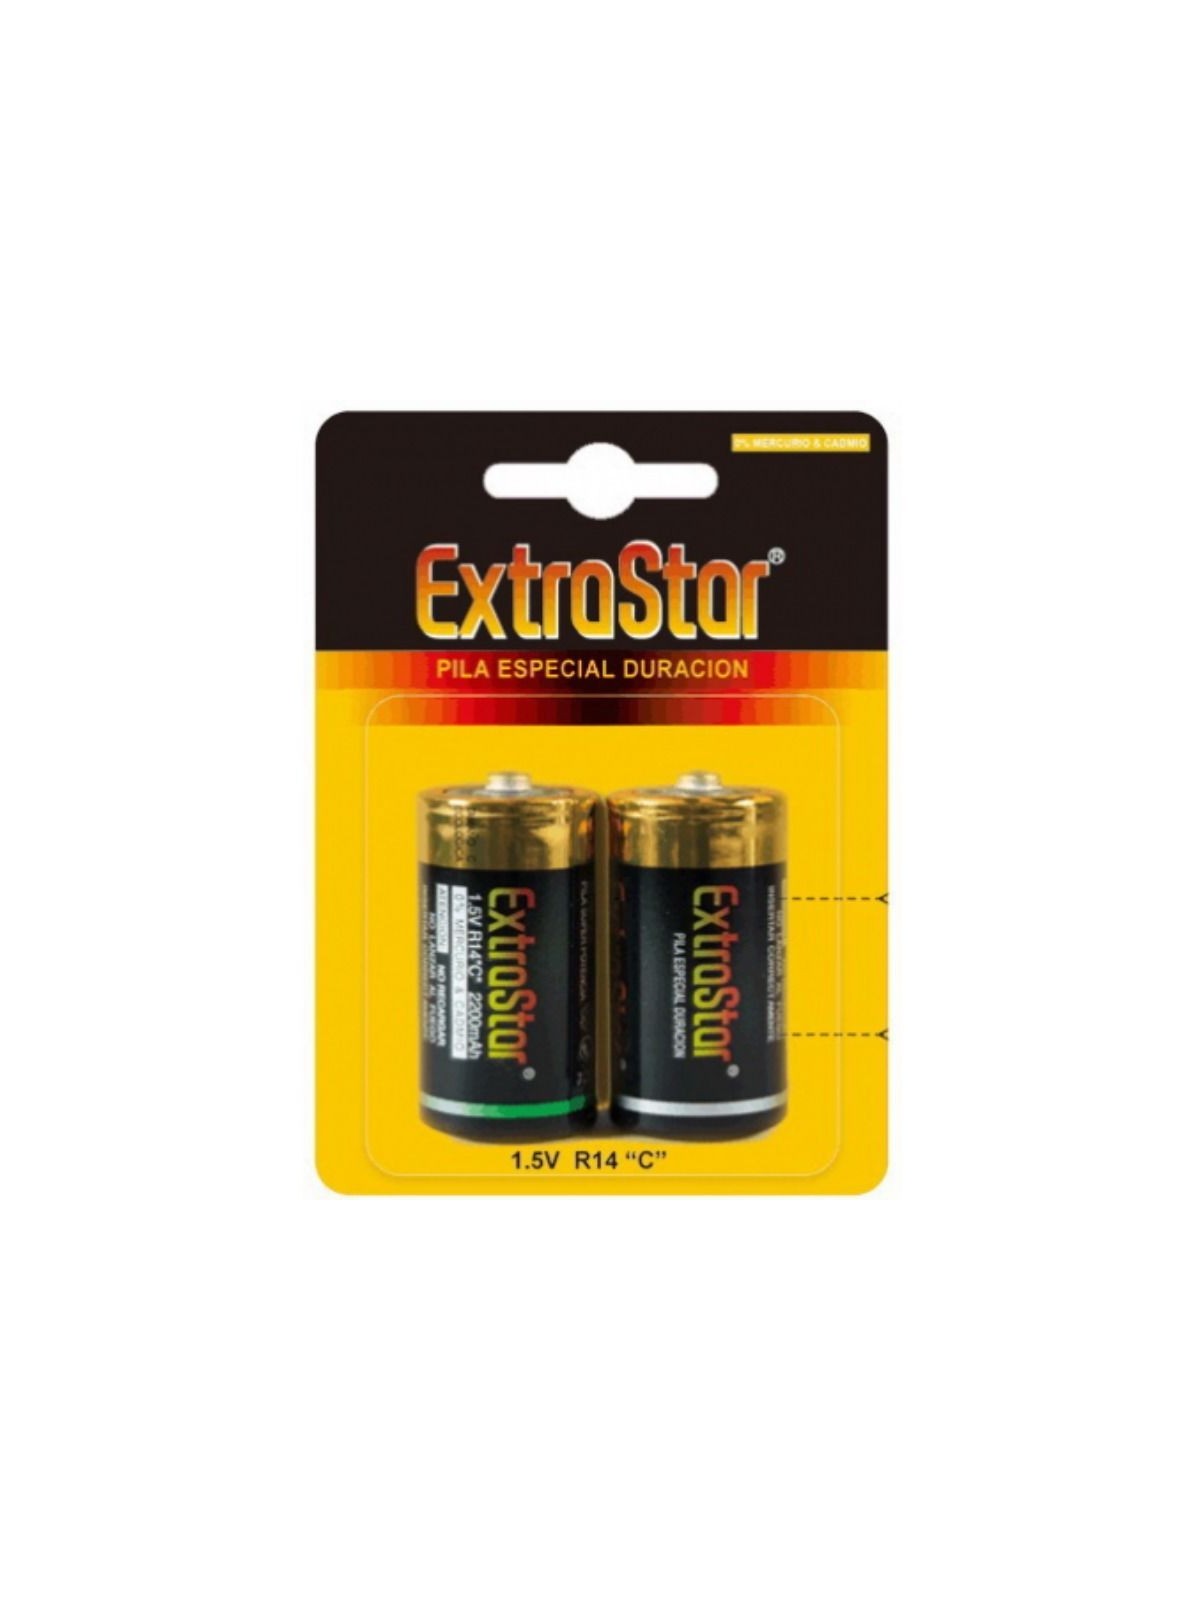 Extrastar Pilas Larga Duración 1.5 V R14 C - Comprar Pilas y baterías Extrastar - Pilas & baterías (1)